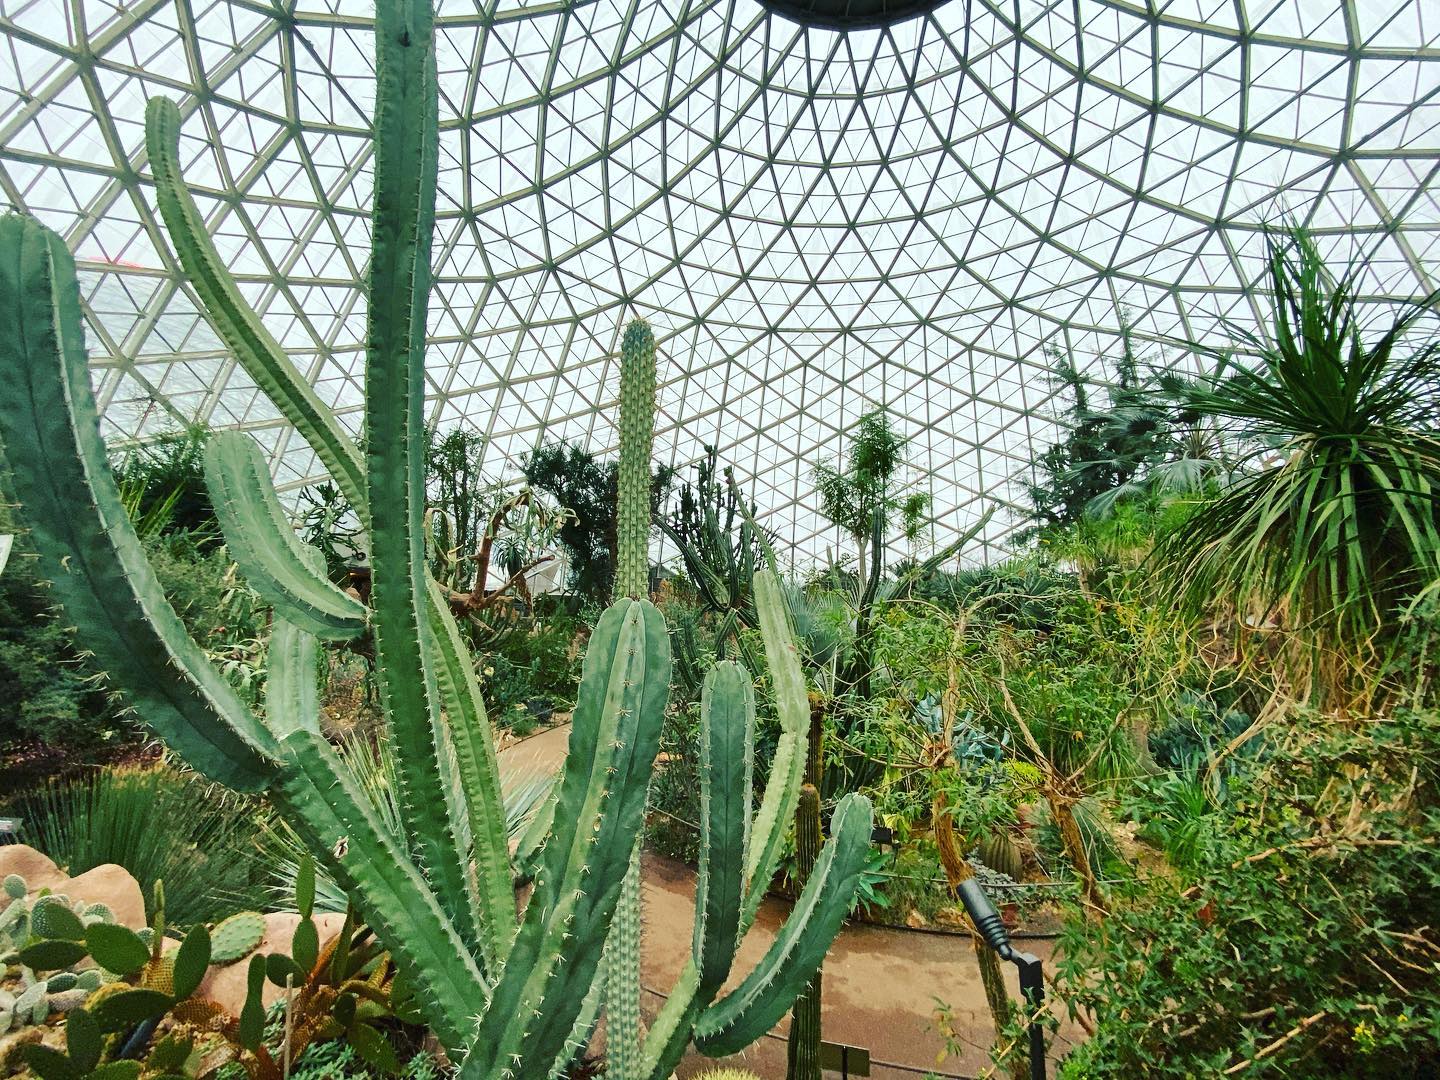 cacti under the Desert Dome